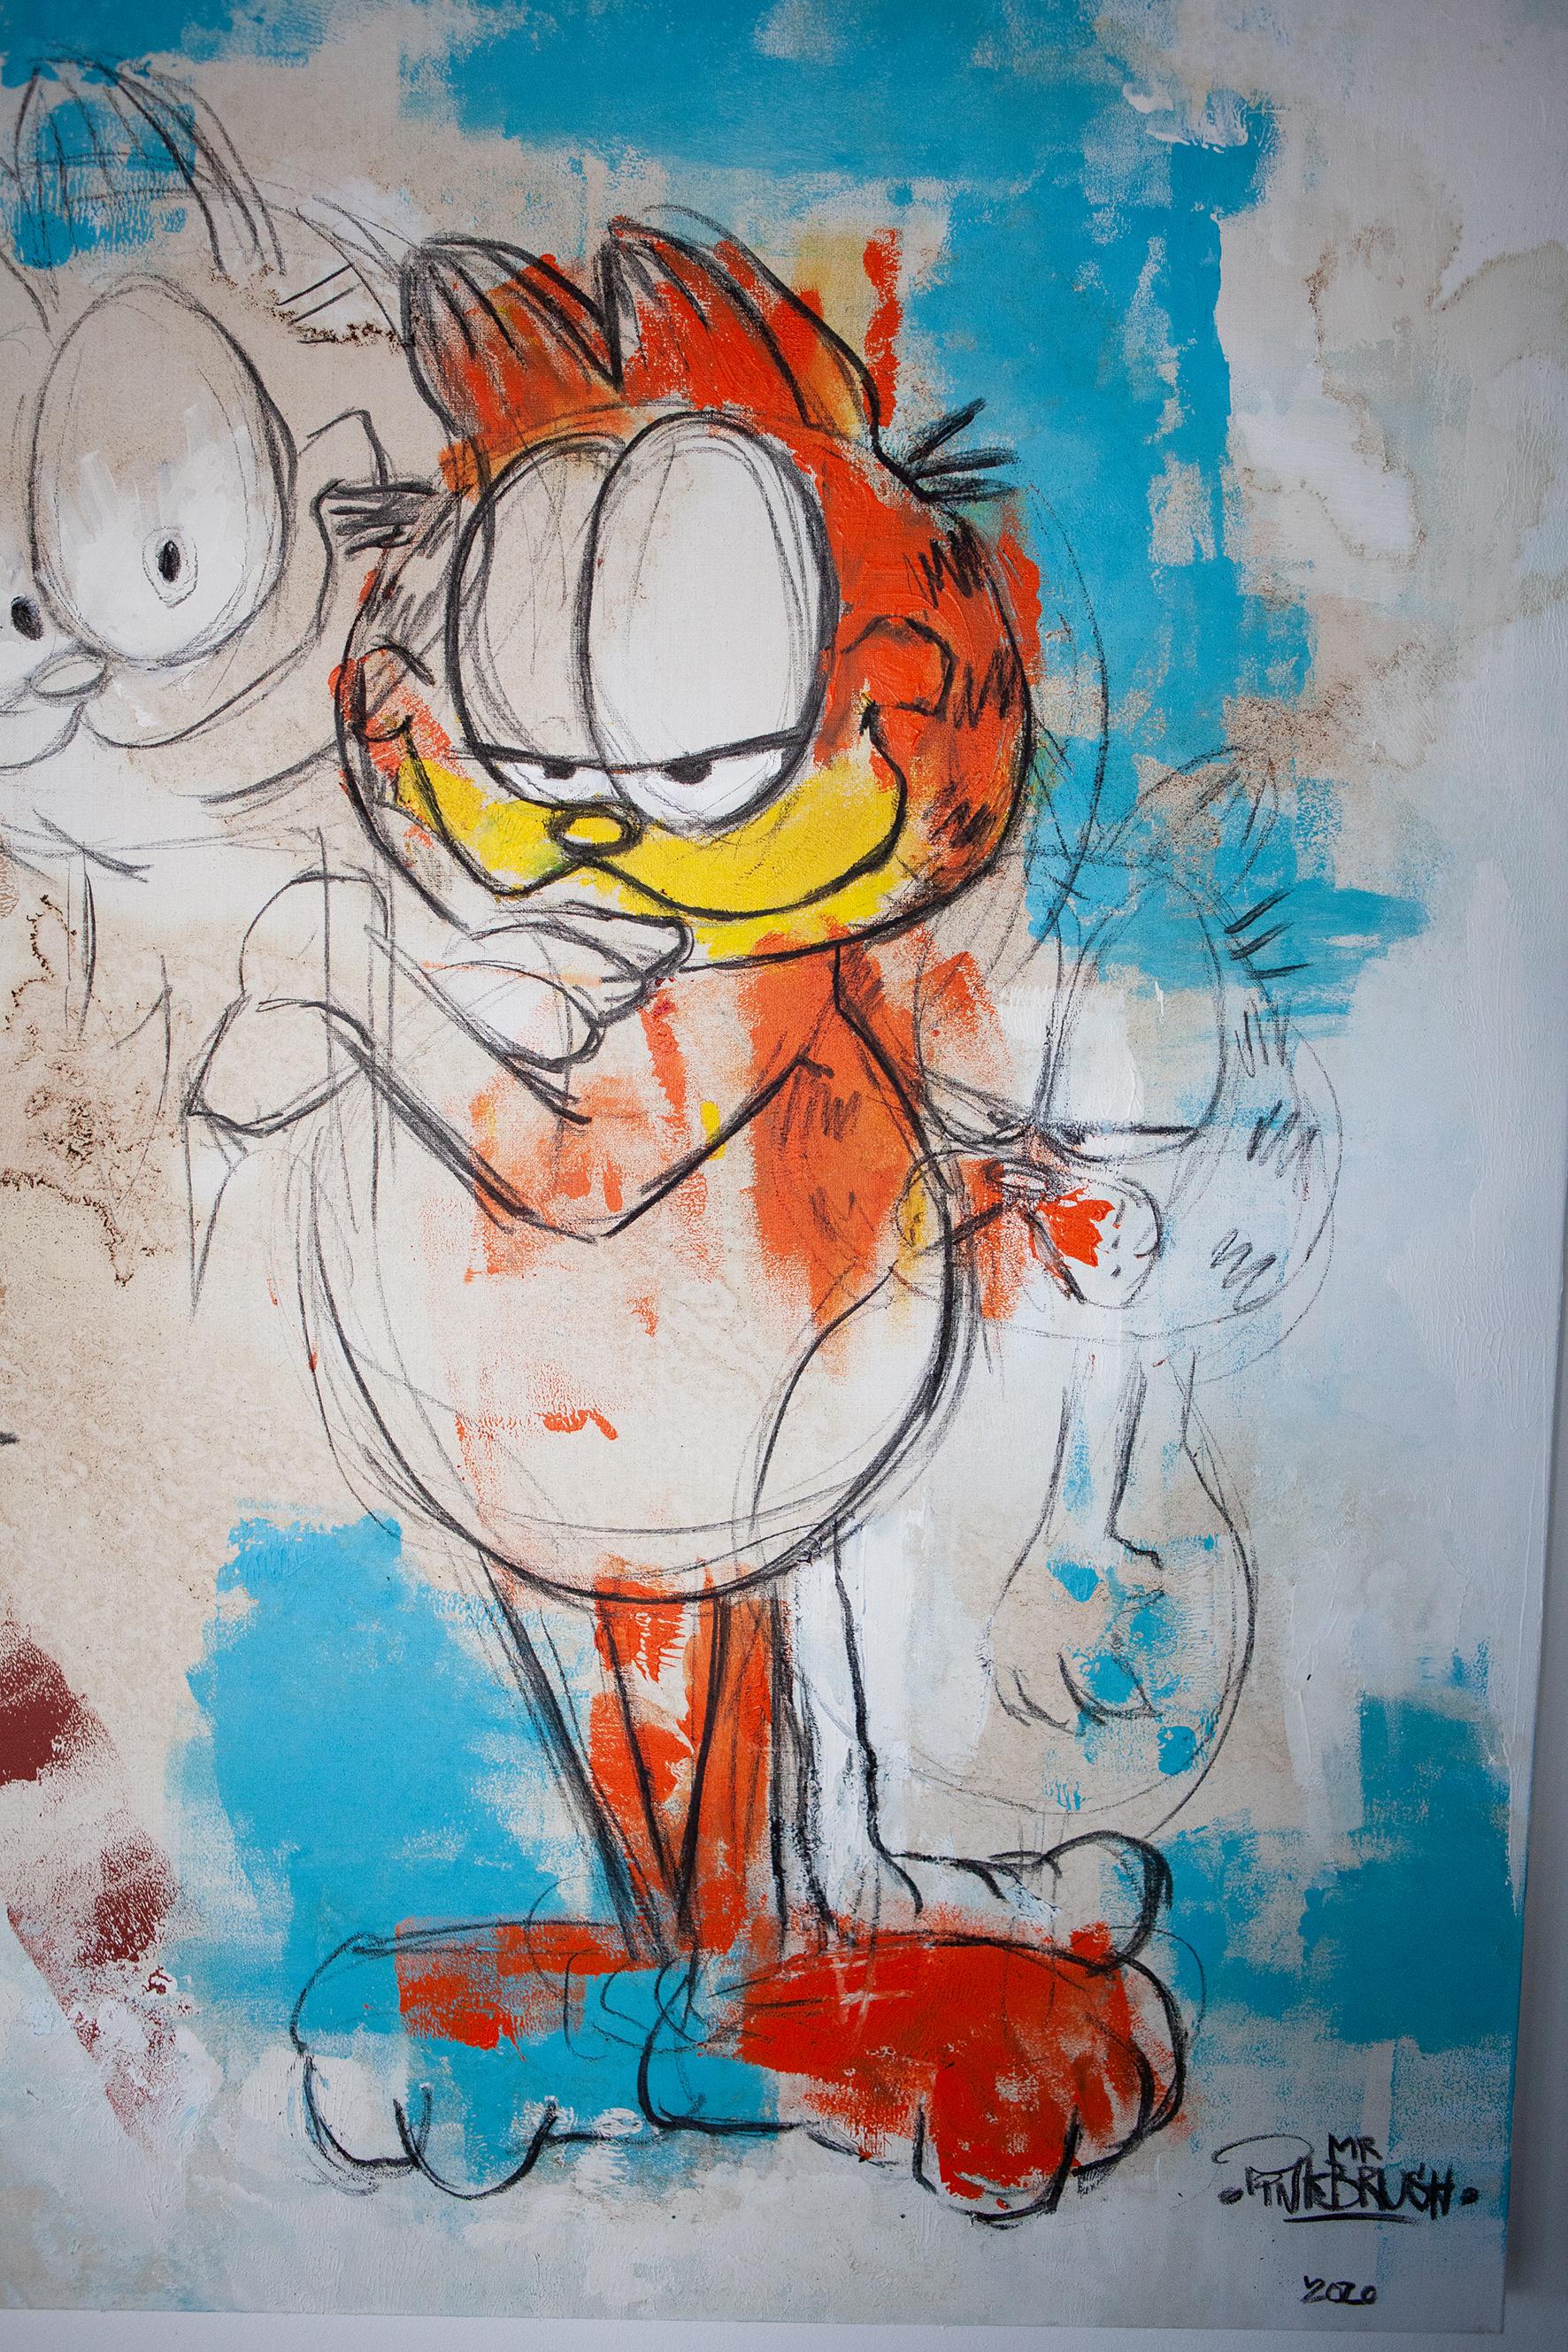 Beyond of Disney - Painting Mickey, Taz and Garfield - Mr. Pinkbrush 3